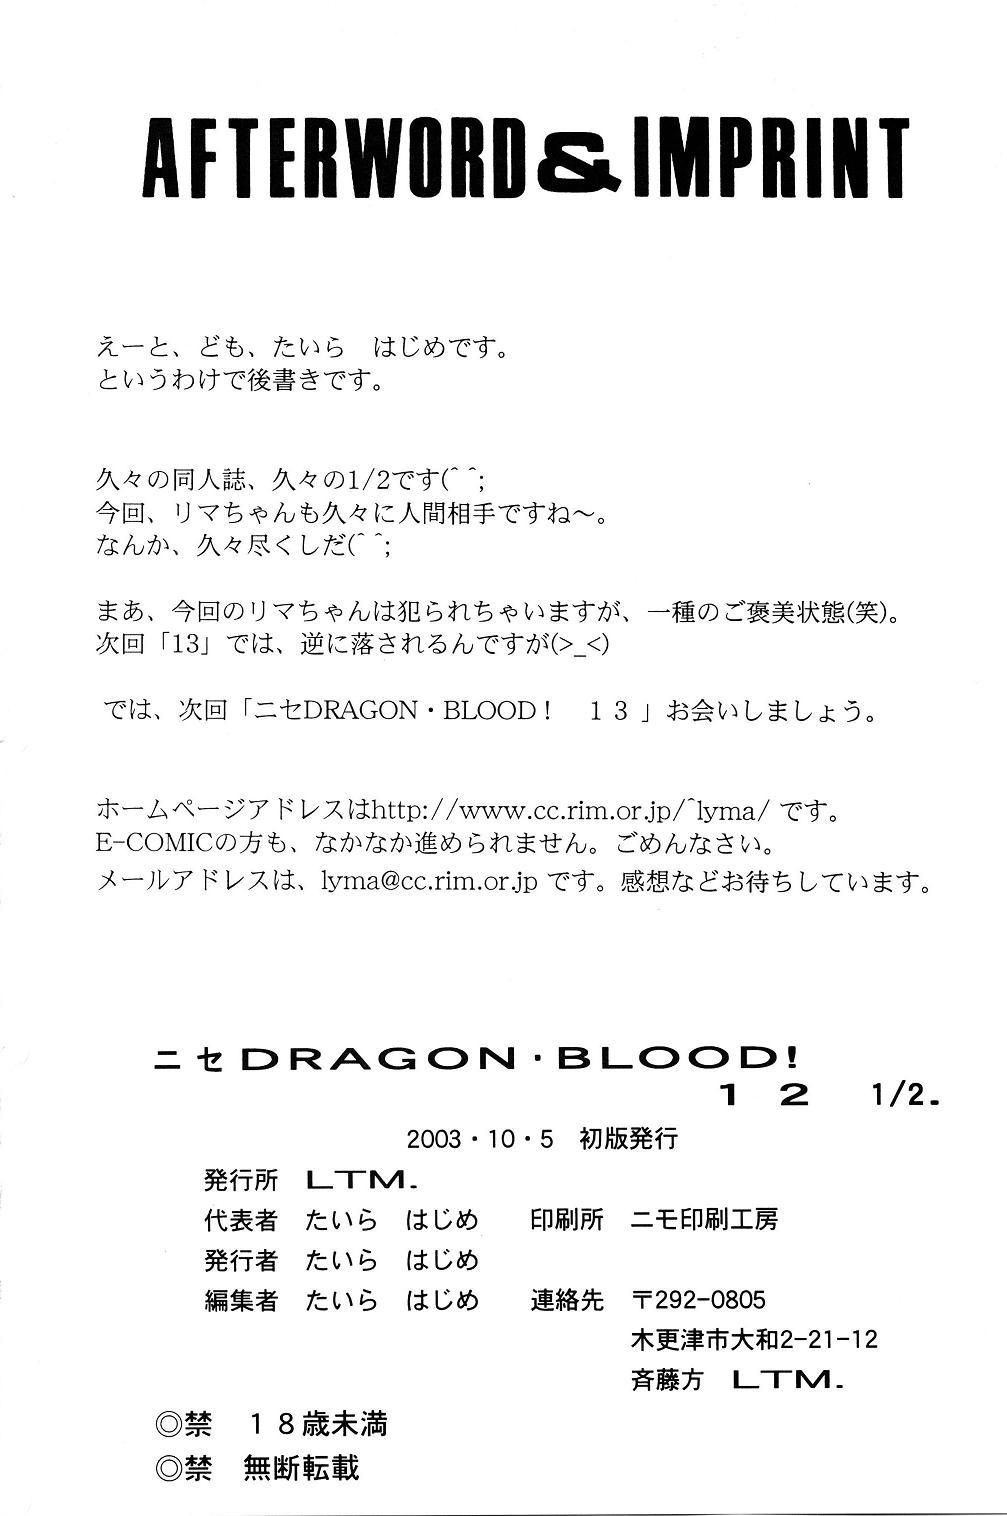 Nise Dragon Blood! 12 1/2 37